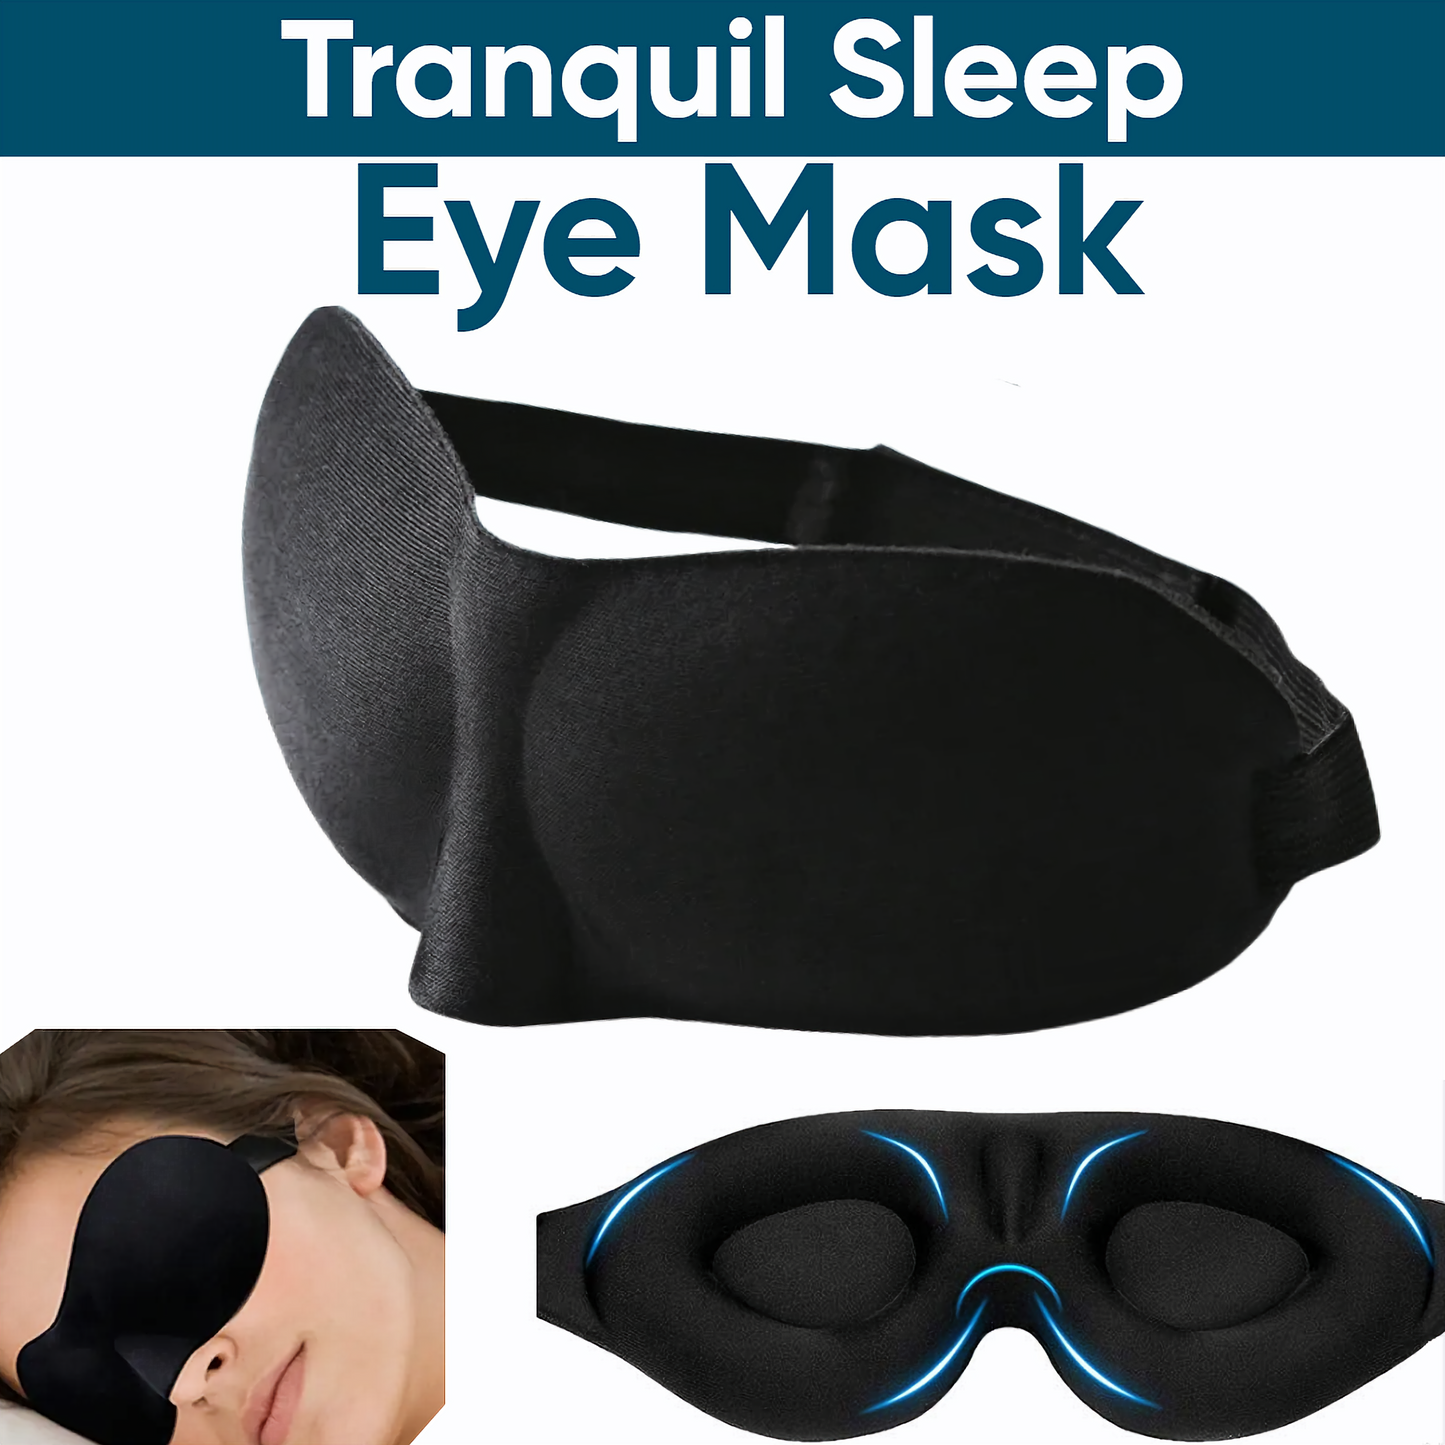 Tranquil Sleep Eye Mask